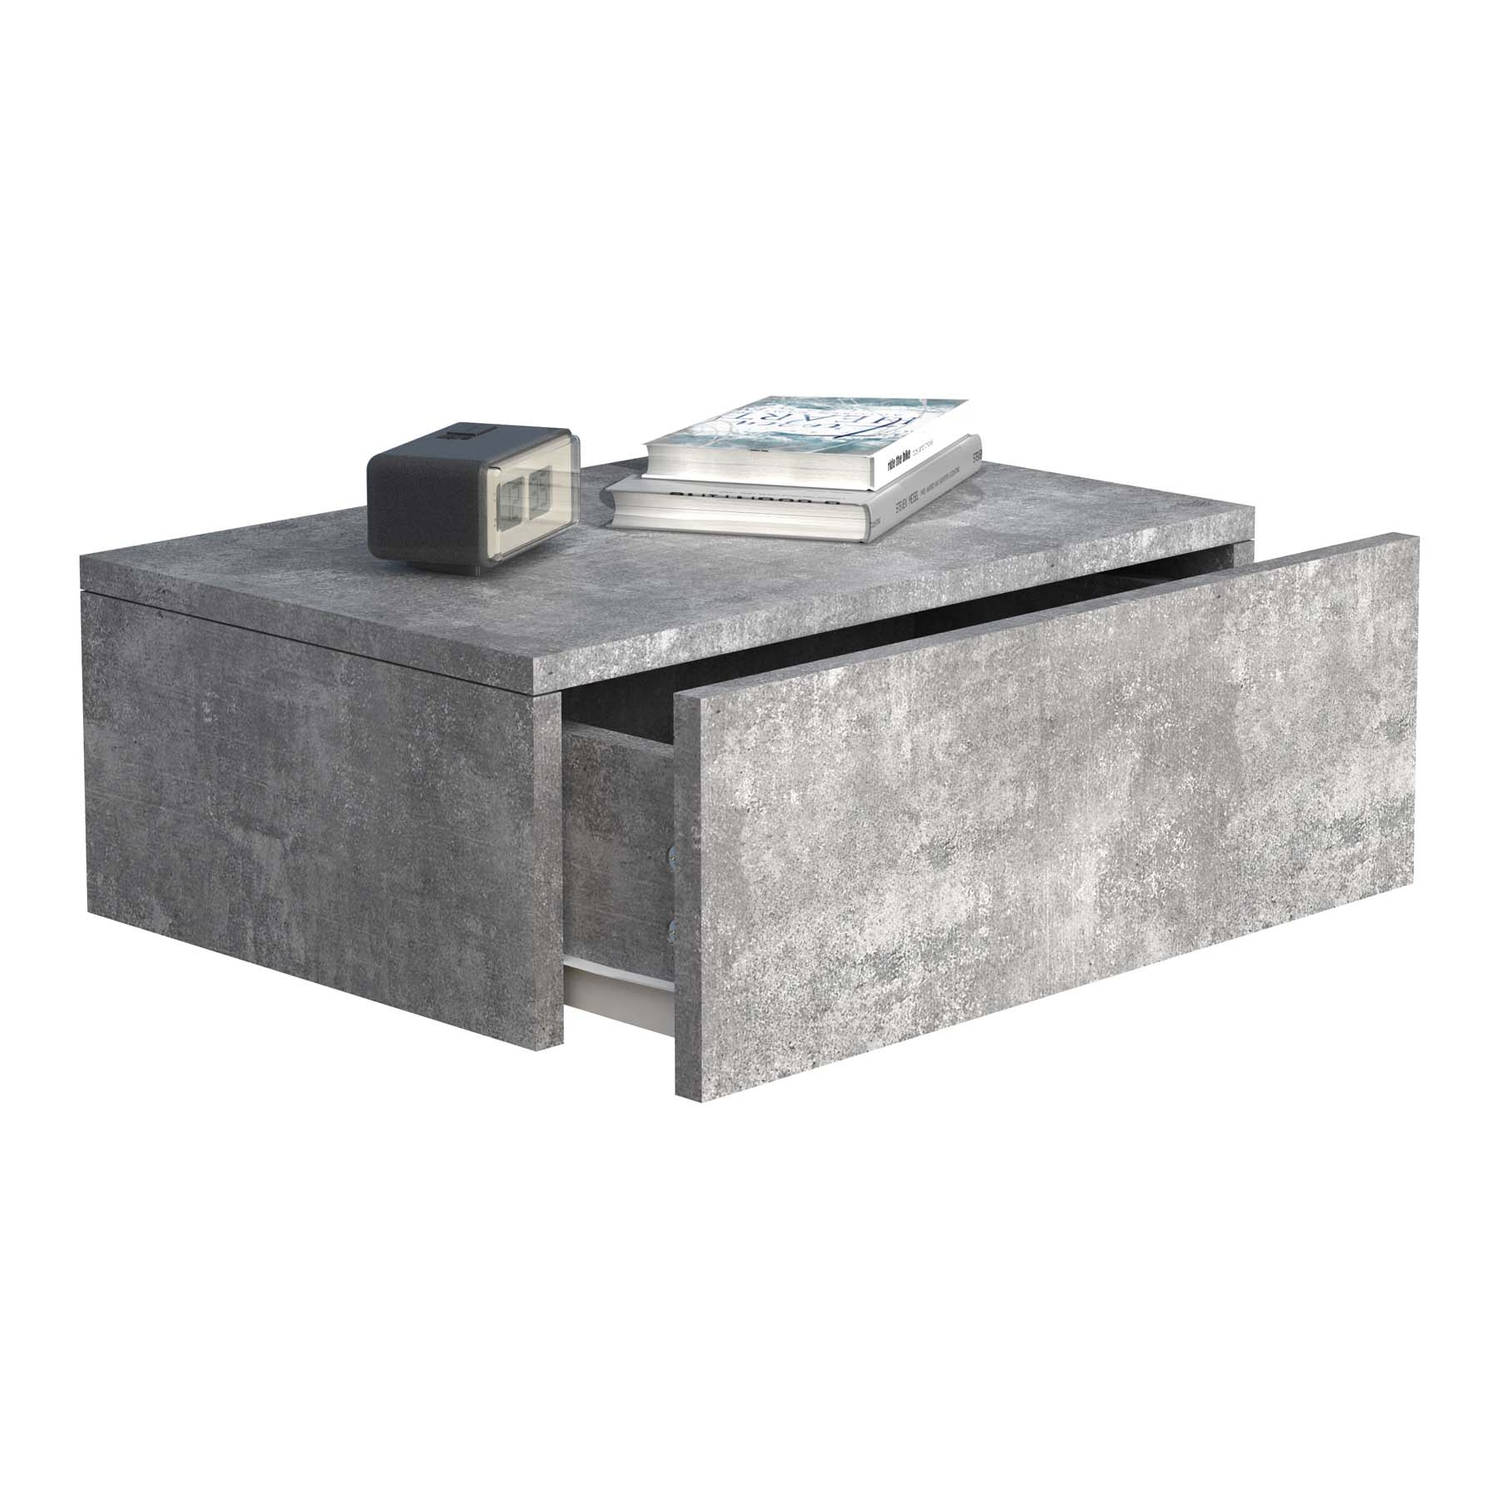 UsalM45 nachtkastje wandmontage 1 lade beton decor.